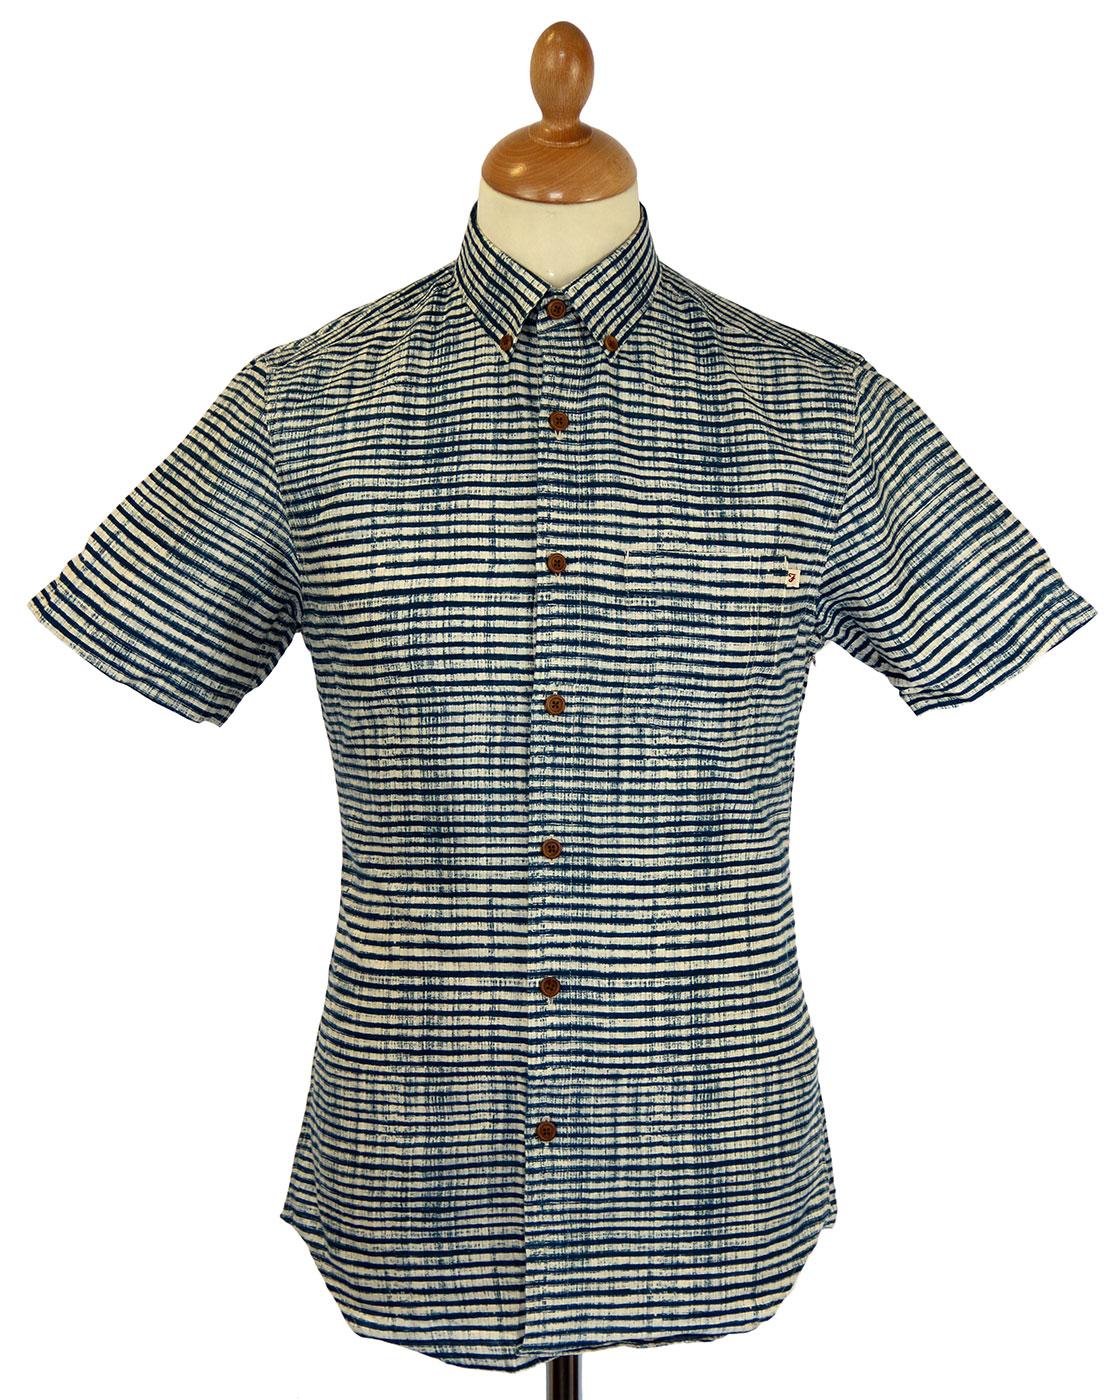 Willet FARAH 1920 Retro Mod Roller Stripe Shirt